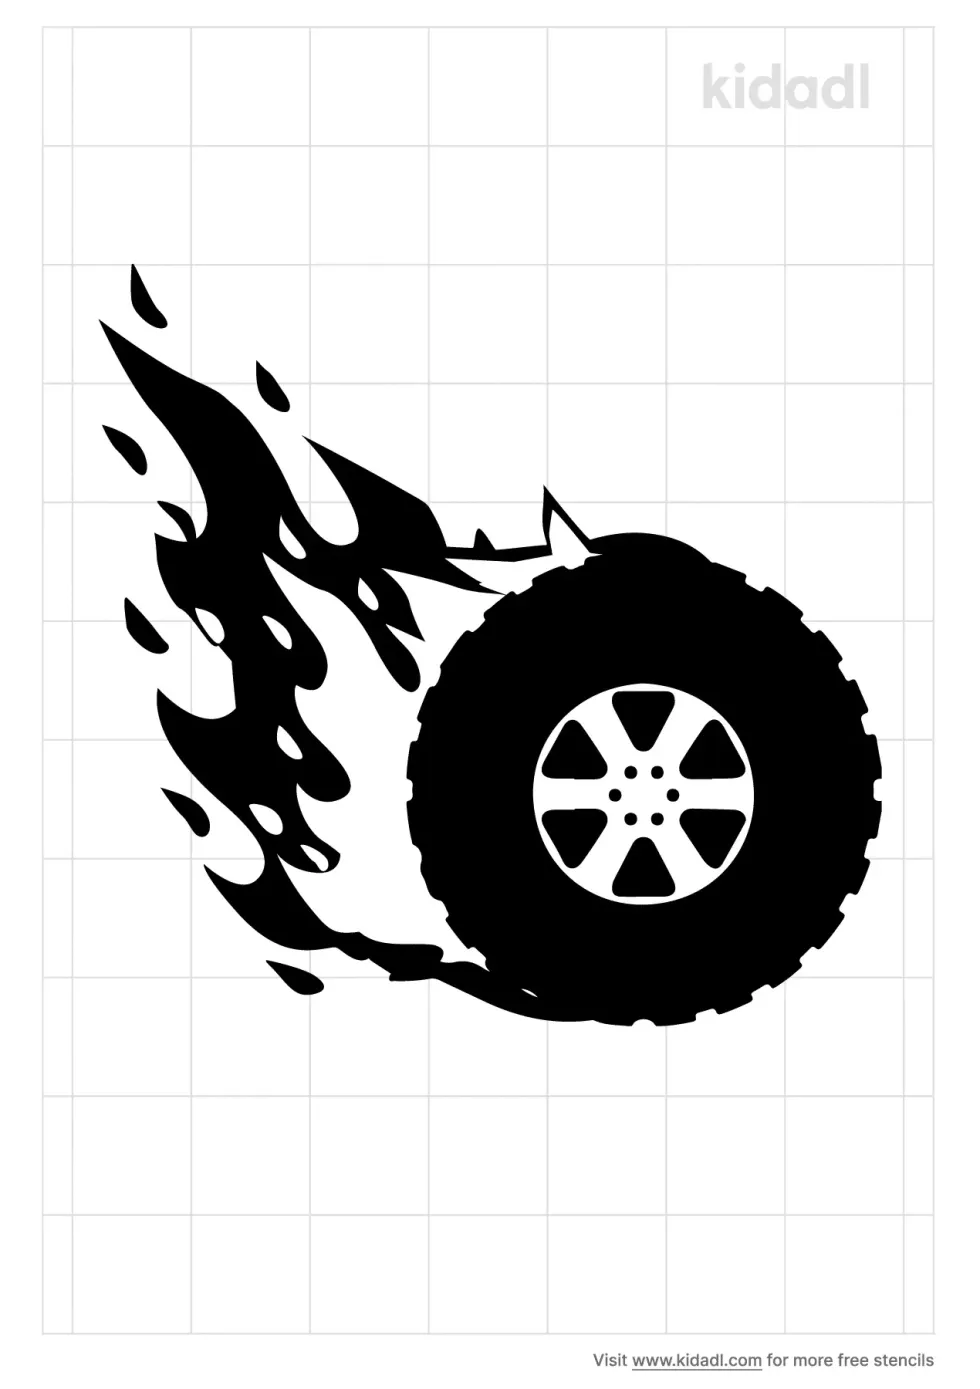 Burning Tyres